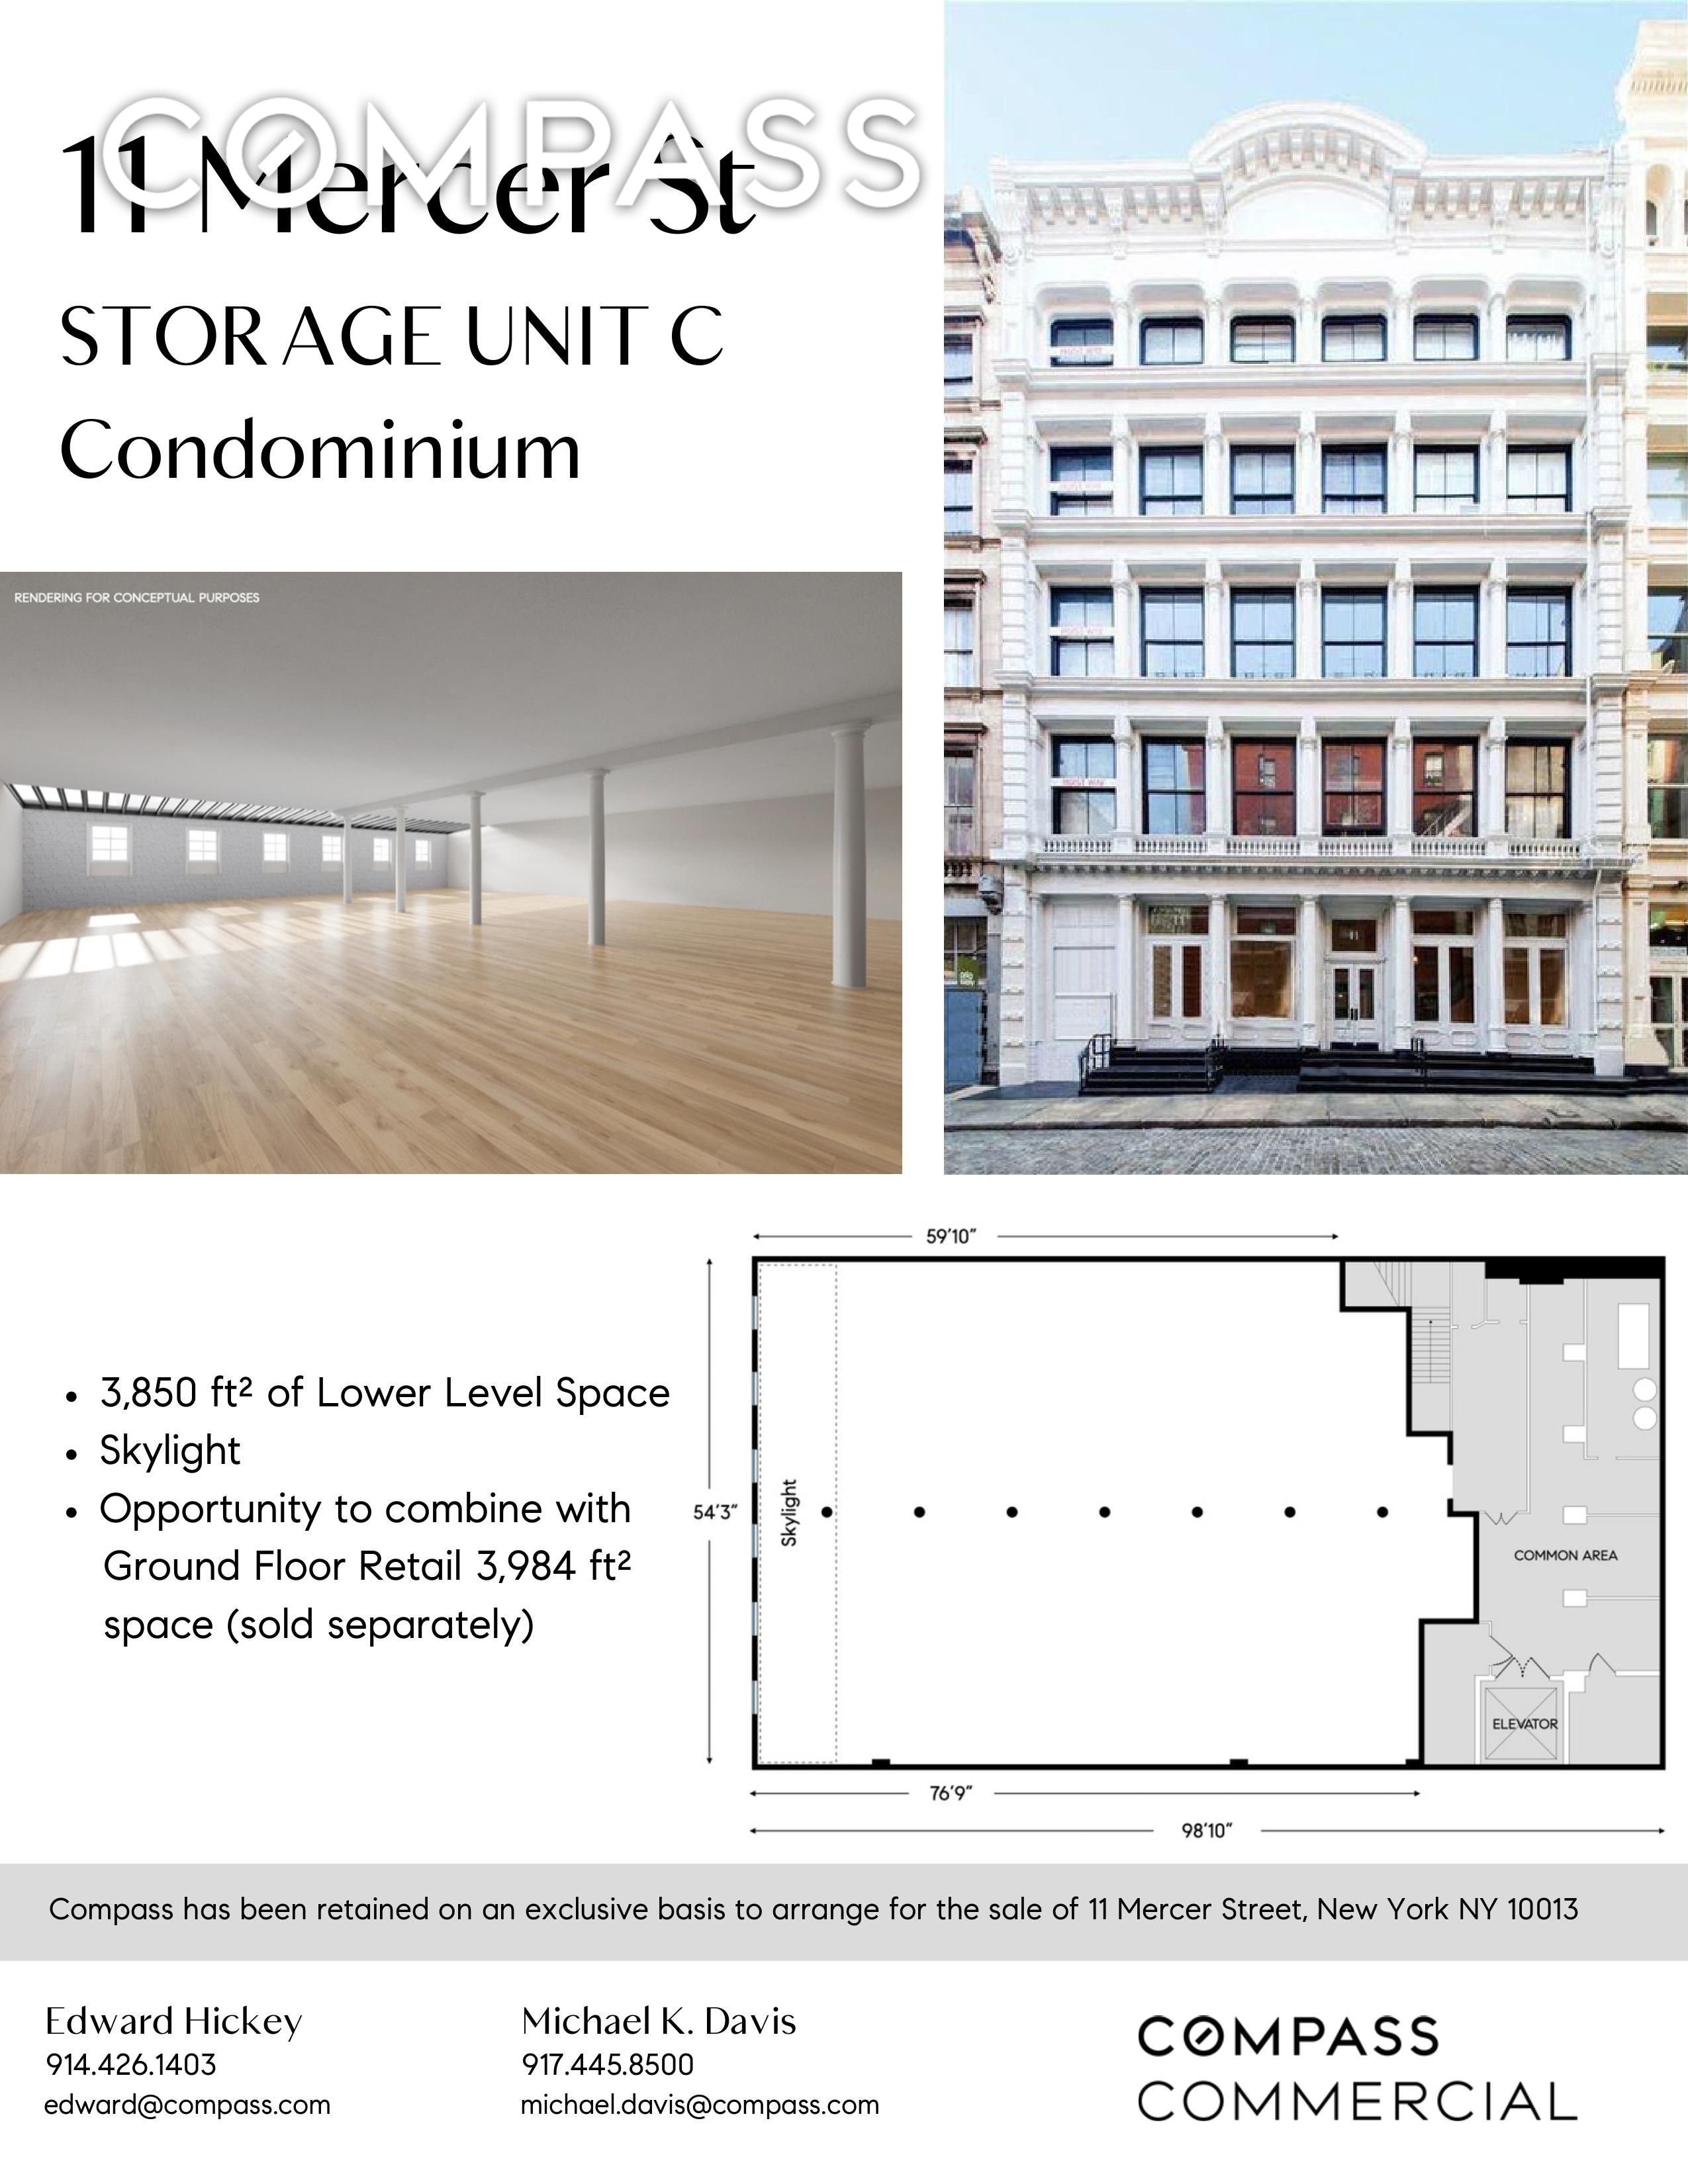 11 Mercer Street Storage C, Soho, Downtown, NYC - 8 Rooms - 